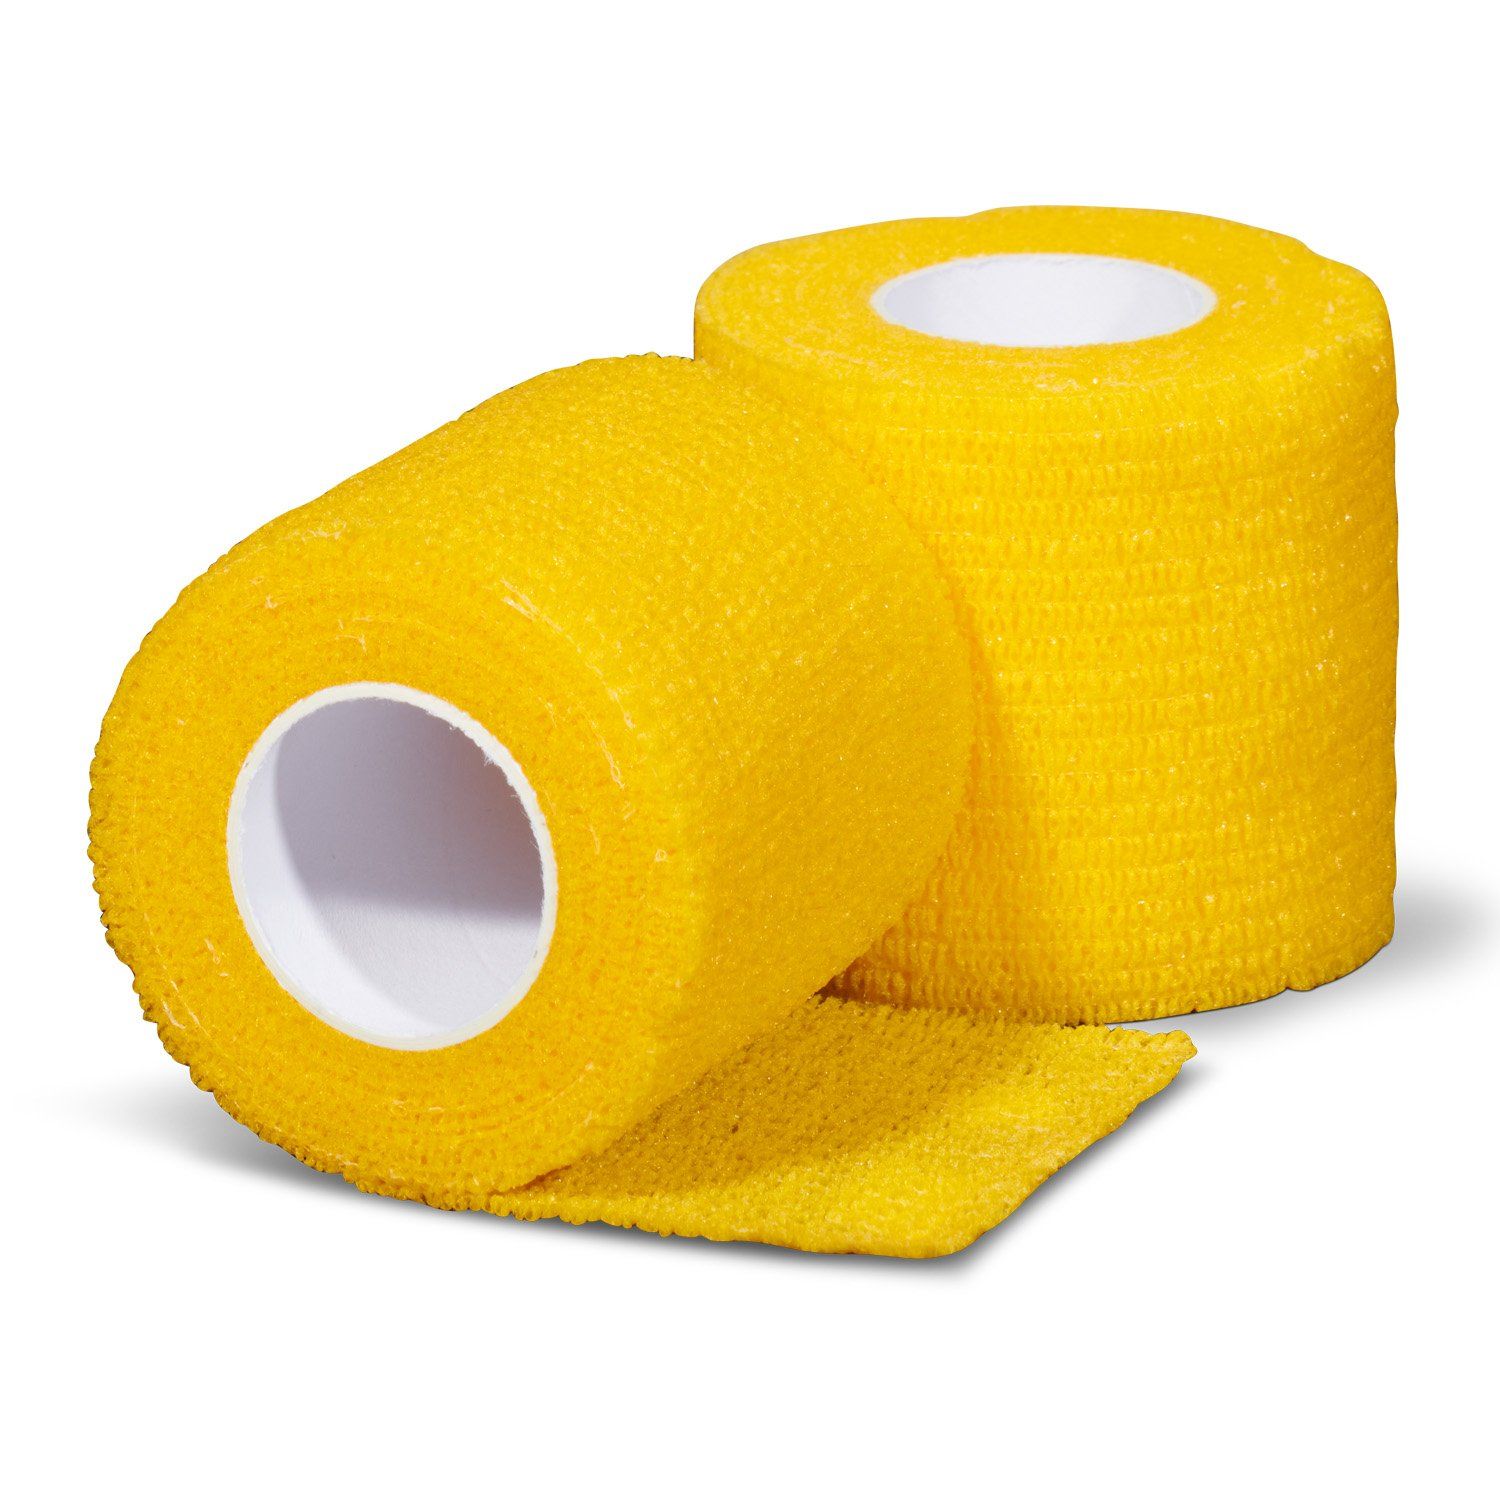 gladiator sports underwrap bandage per 12 rolls yellow